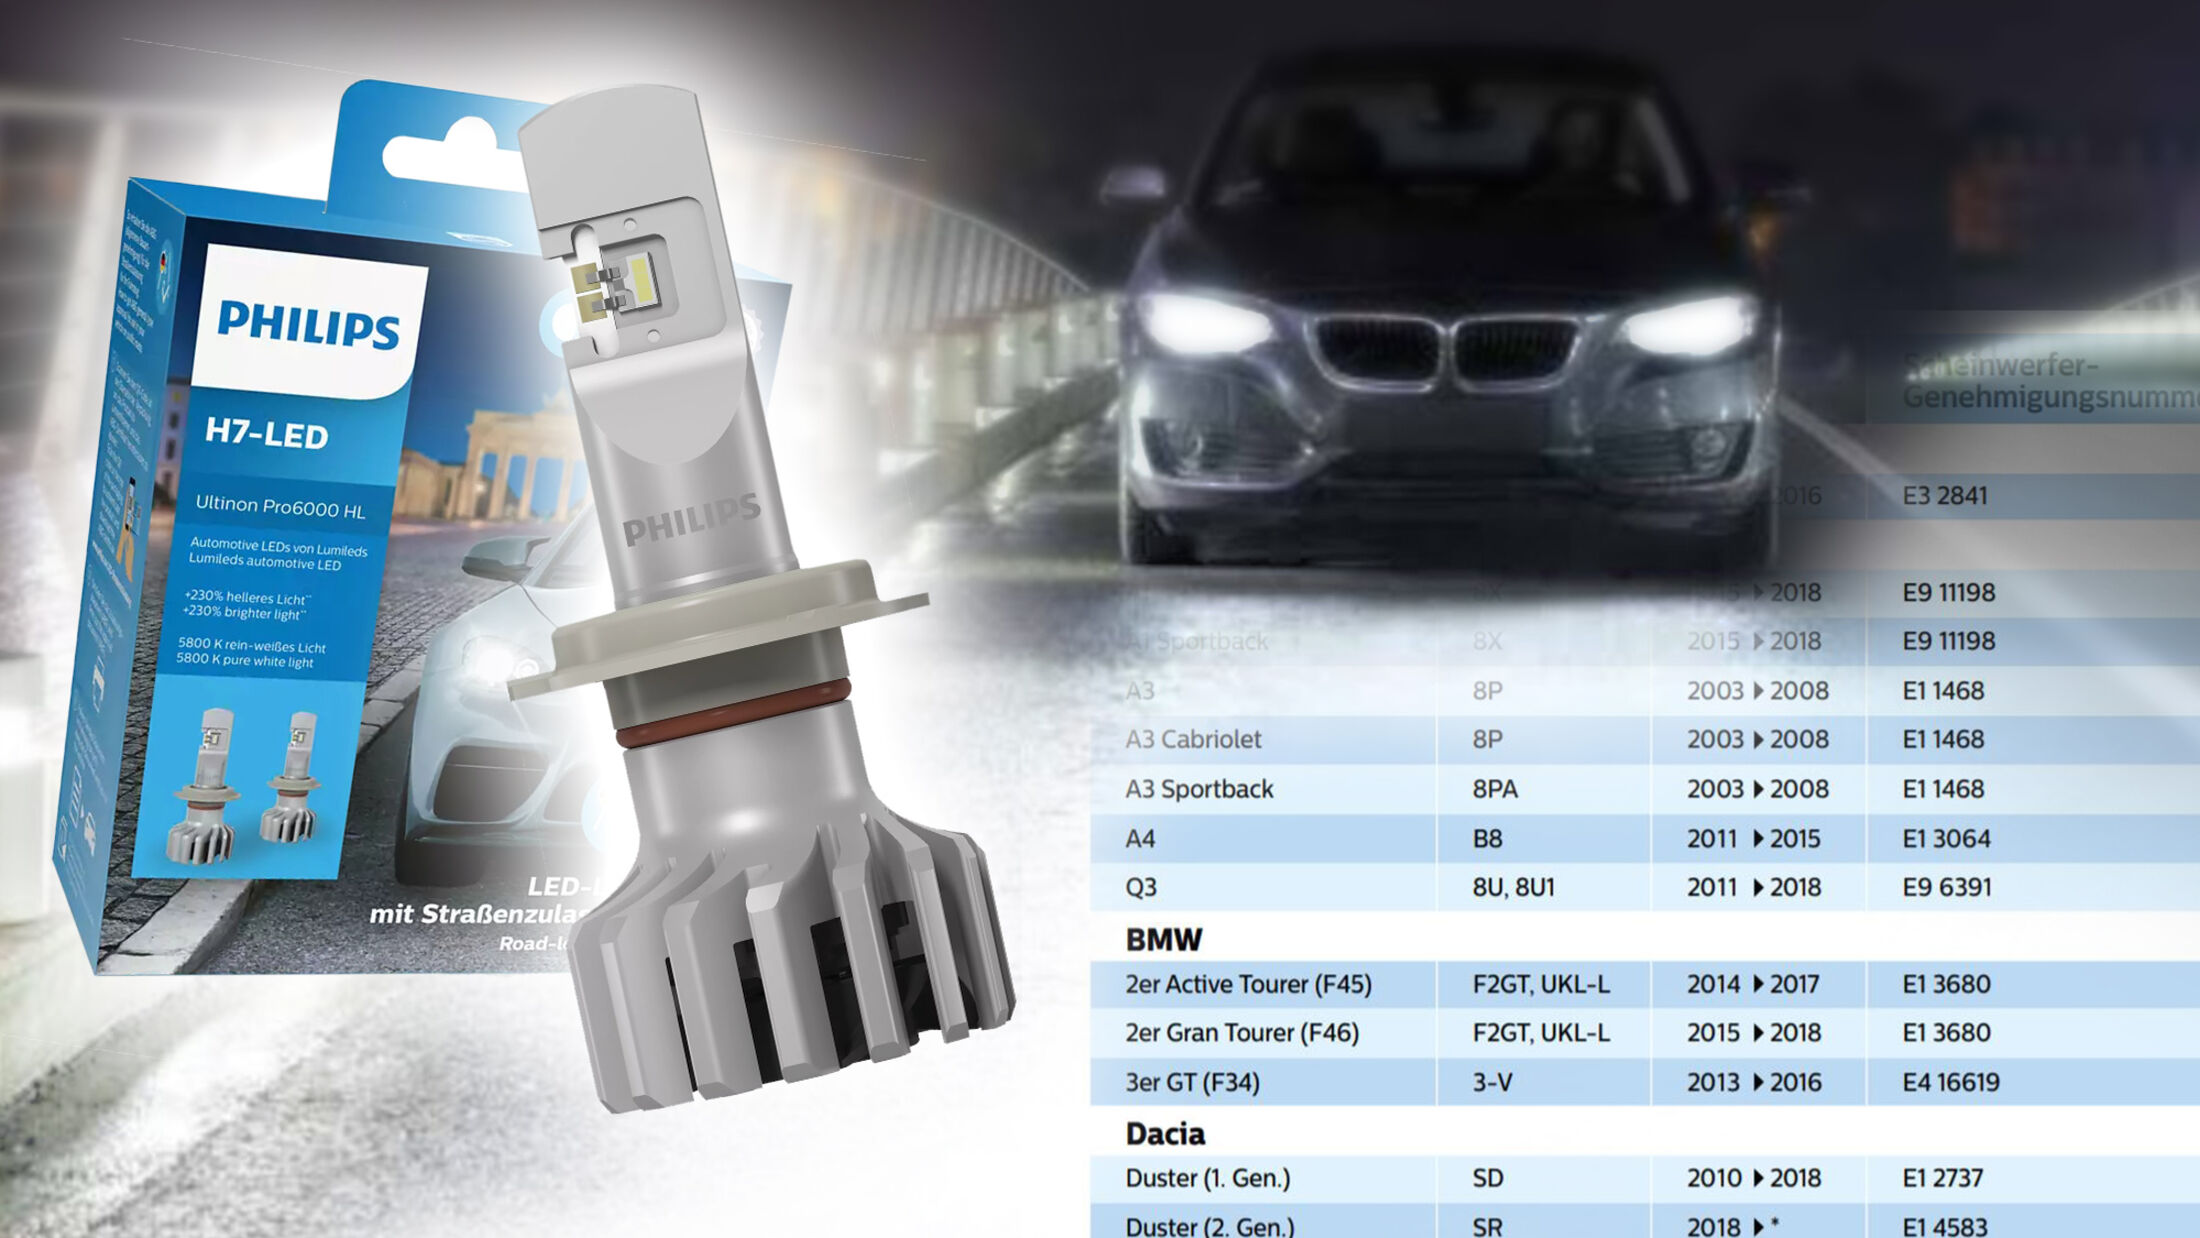 Angebot: H4-LED-Autolampe von Philips - AUTO BILD